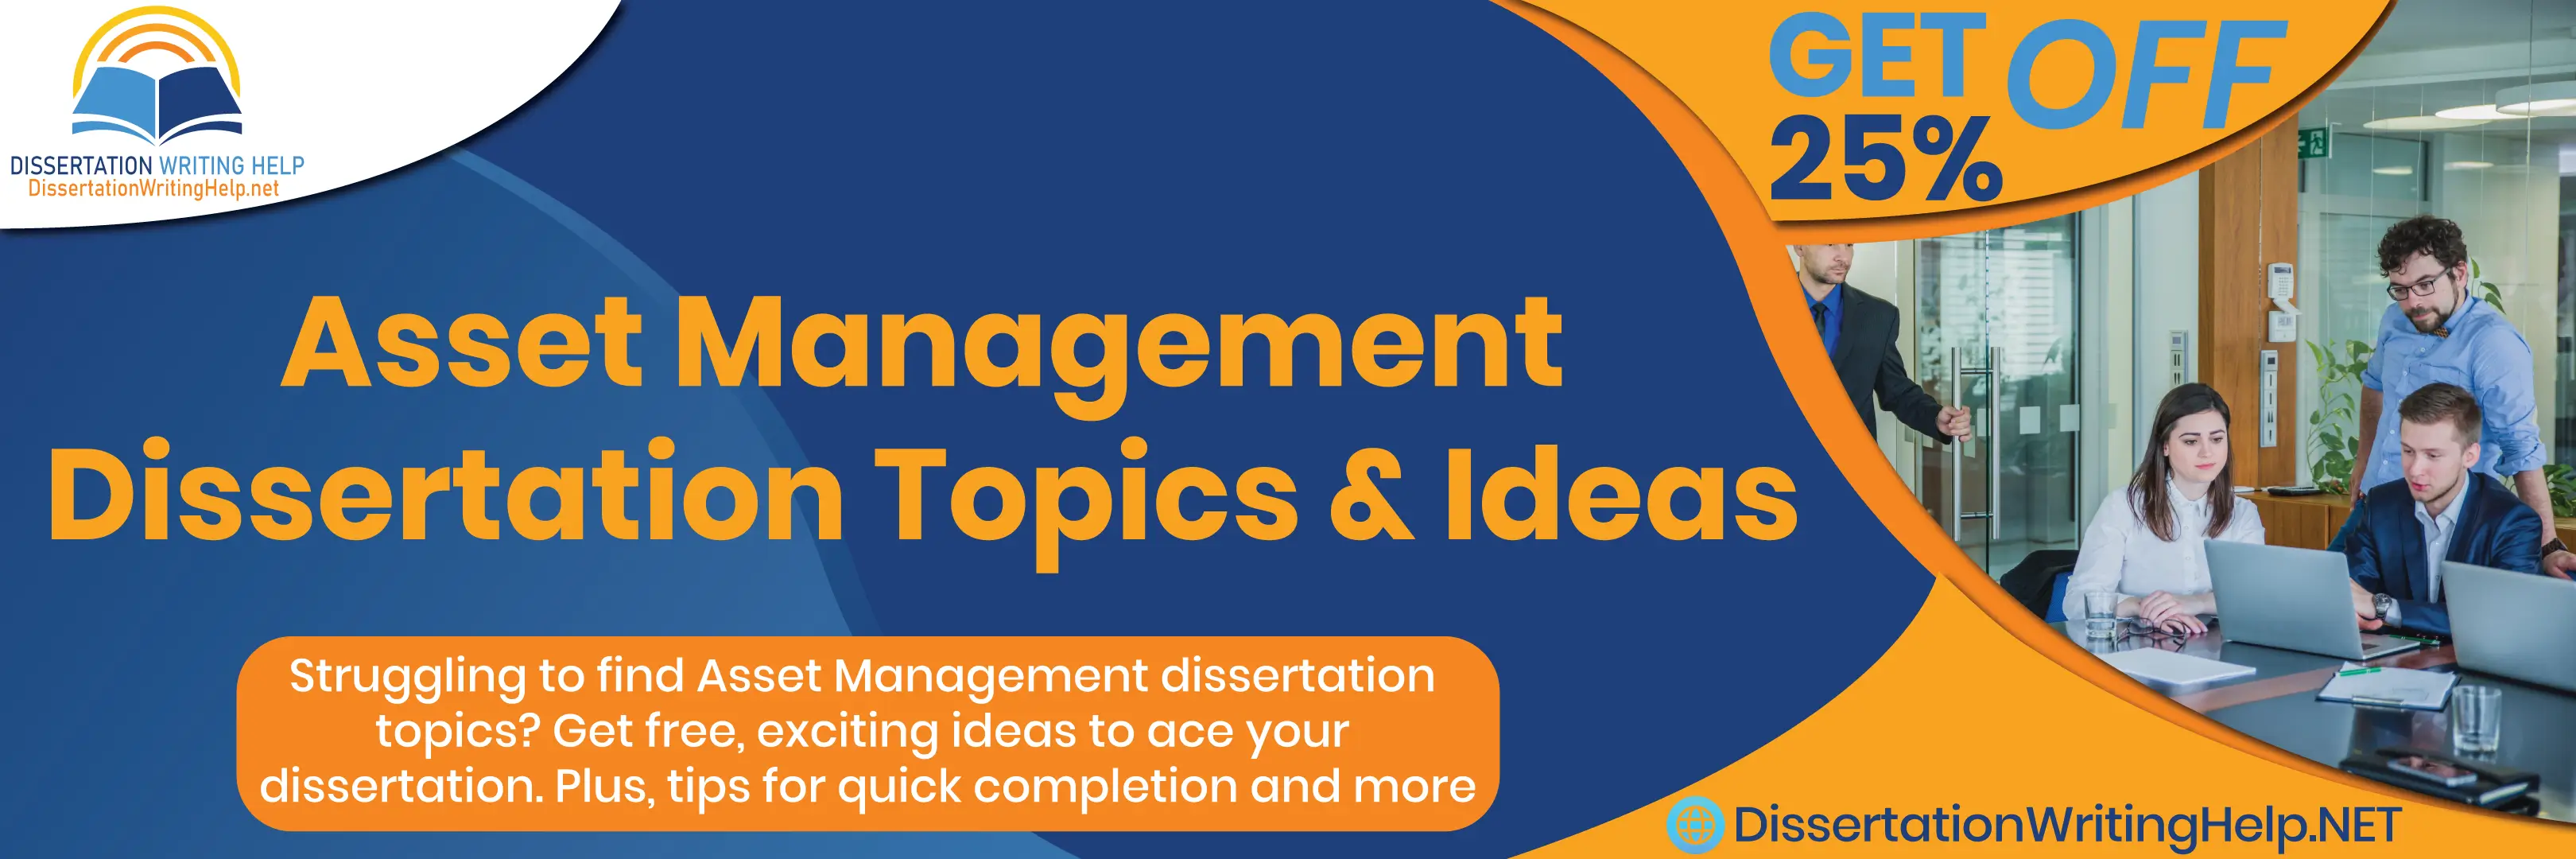 asset-management-dissertation-topics-and-ideas